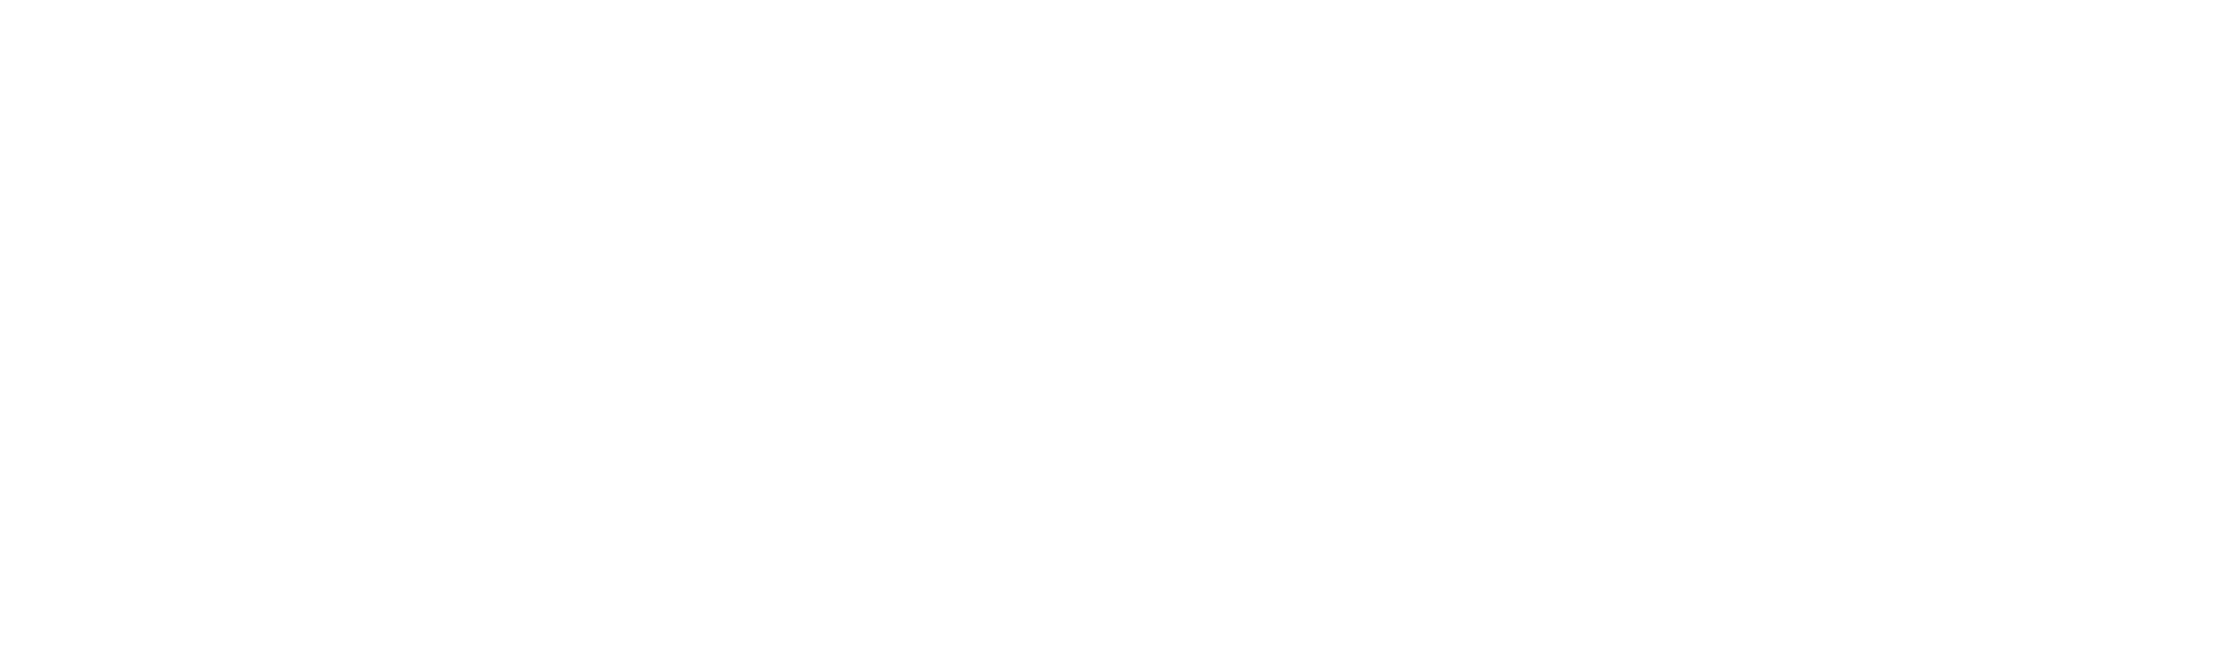 mh-friends